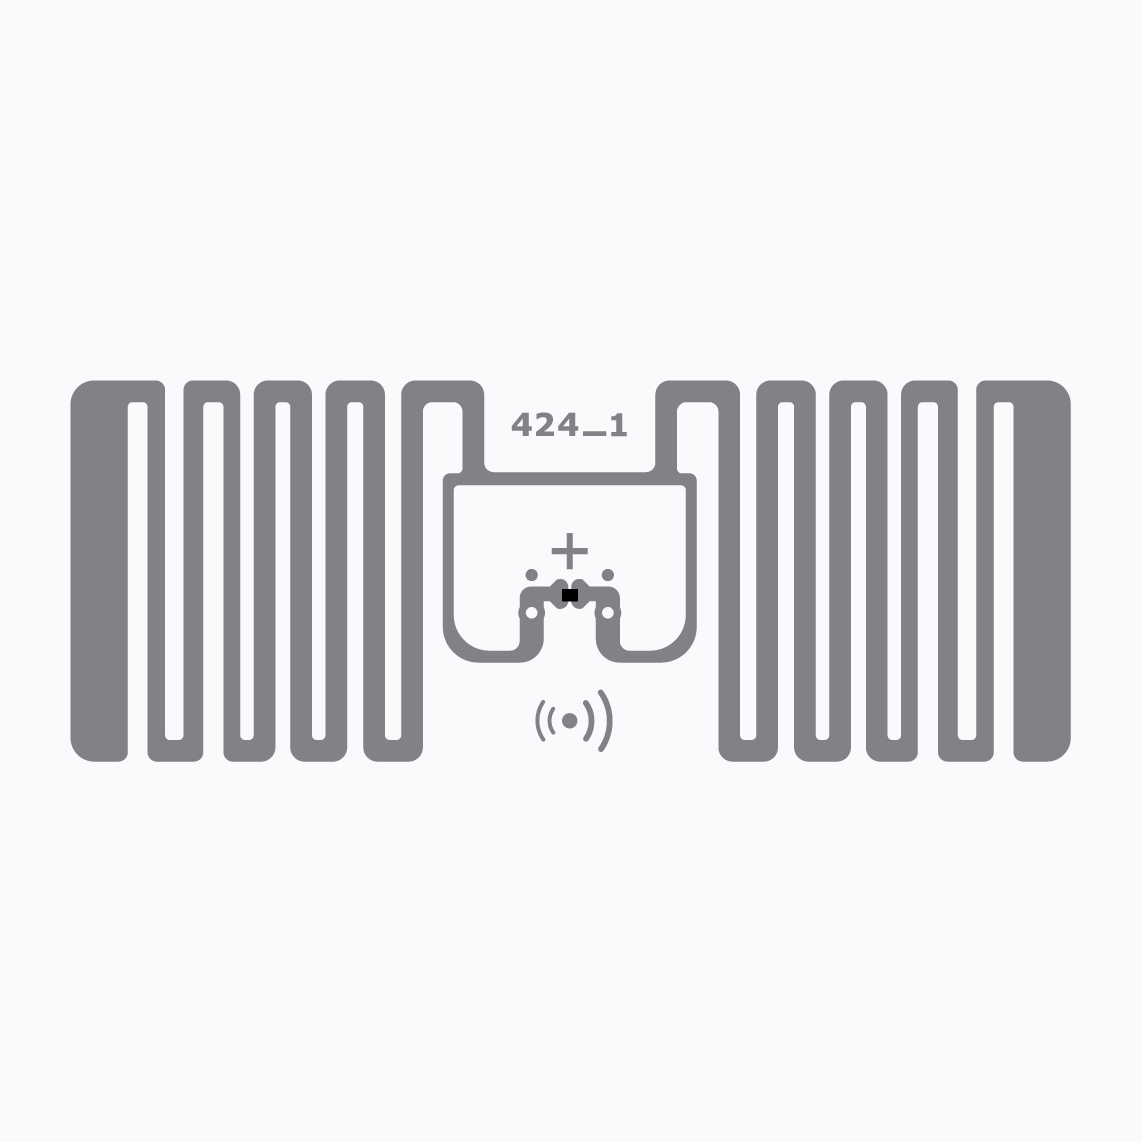 UHF RFID Inlay: Miniweb, Monza R6